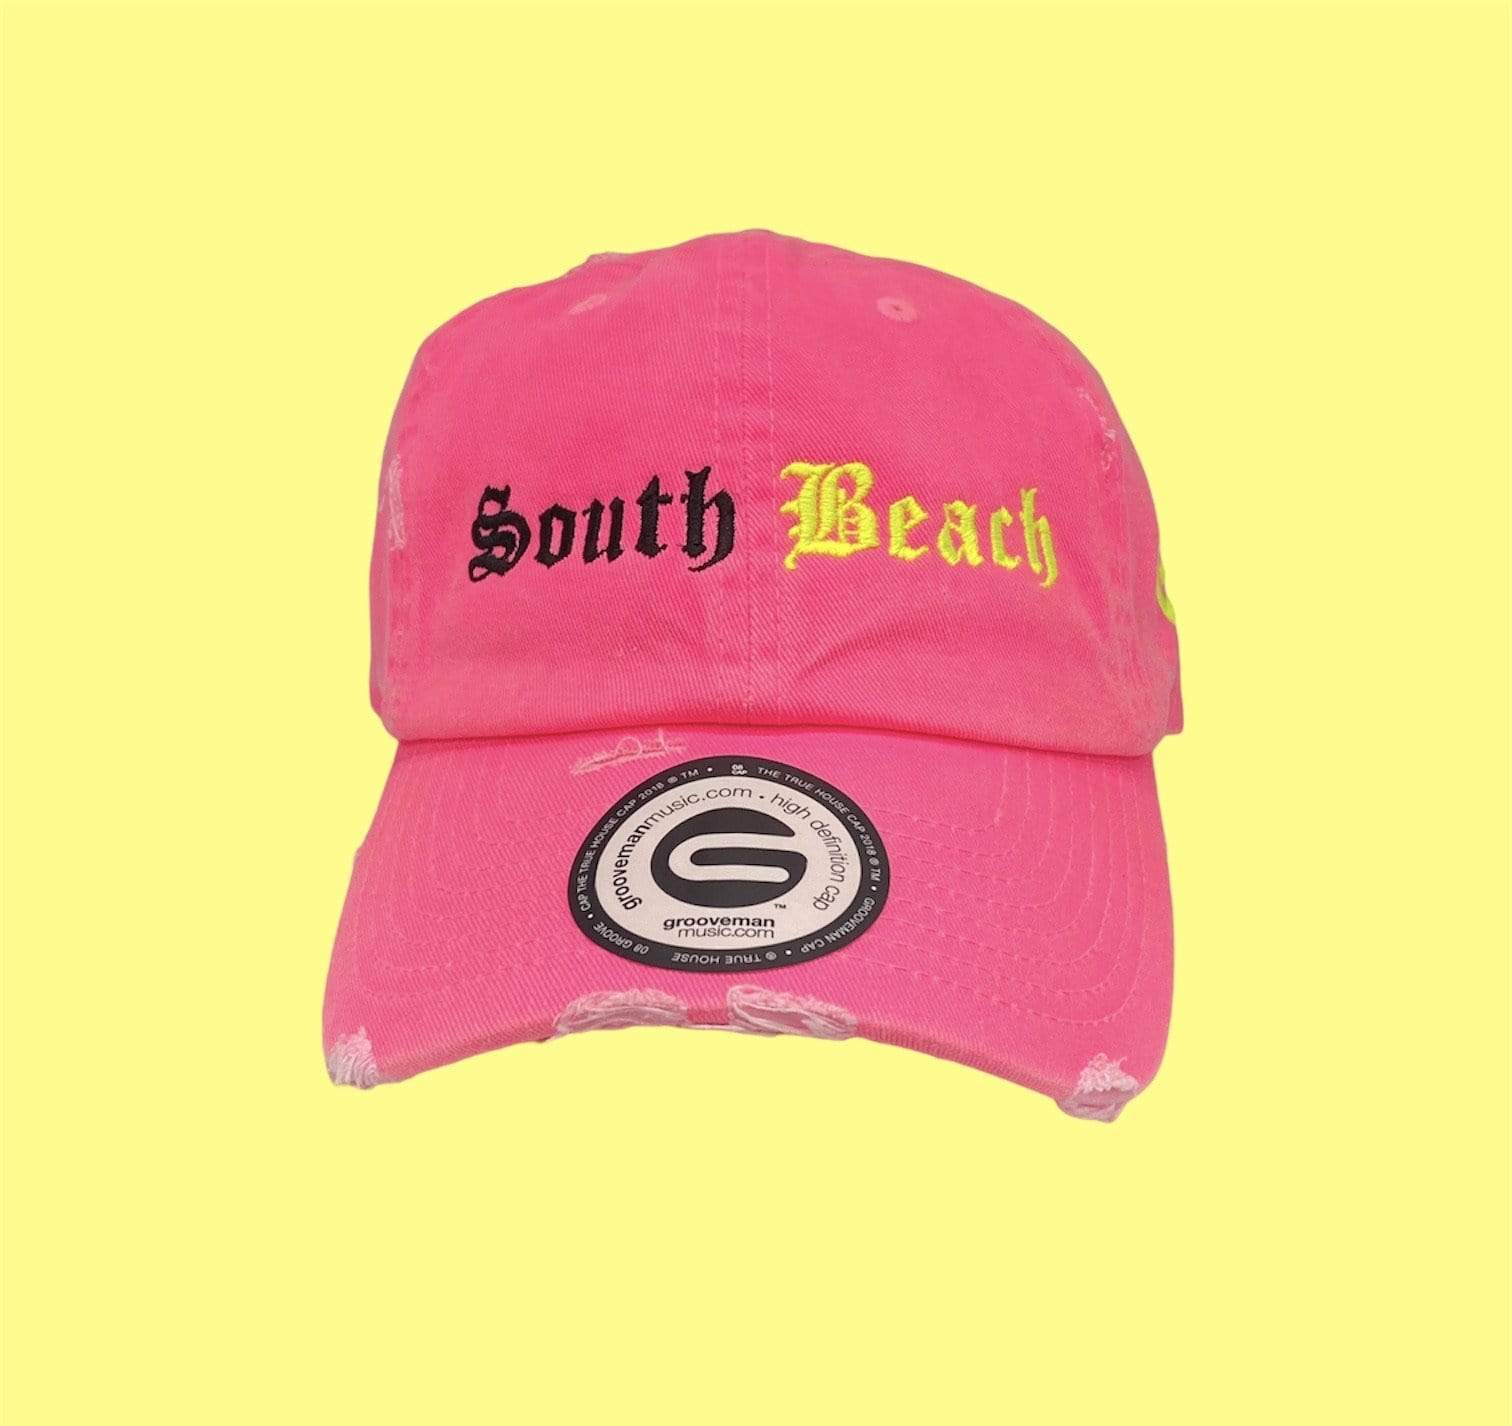 Grooveman Music Hats Miami Beach Vintage Dad Hat